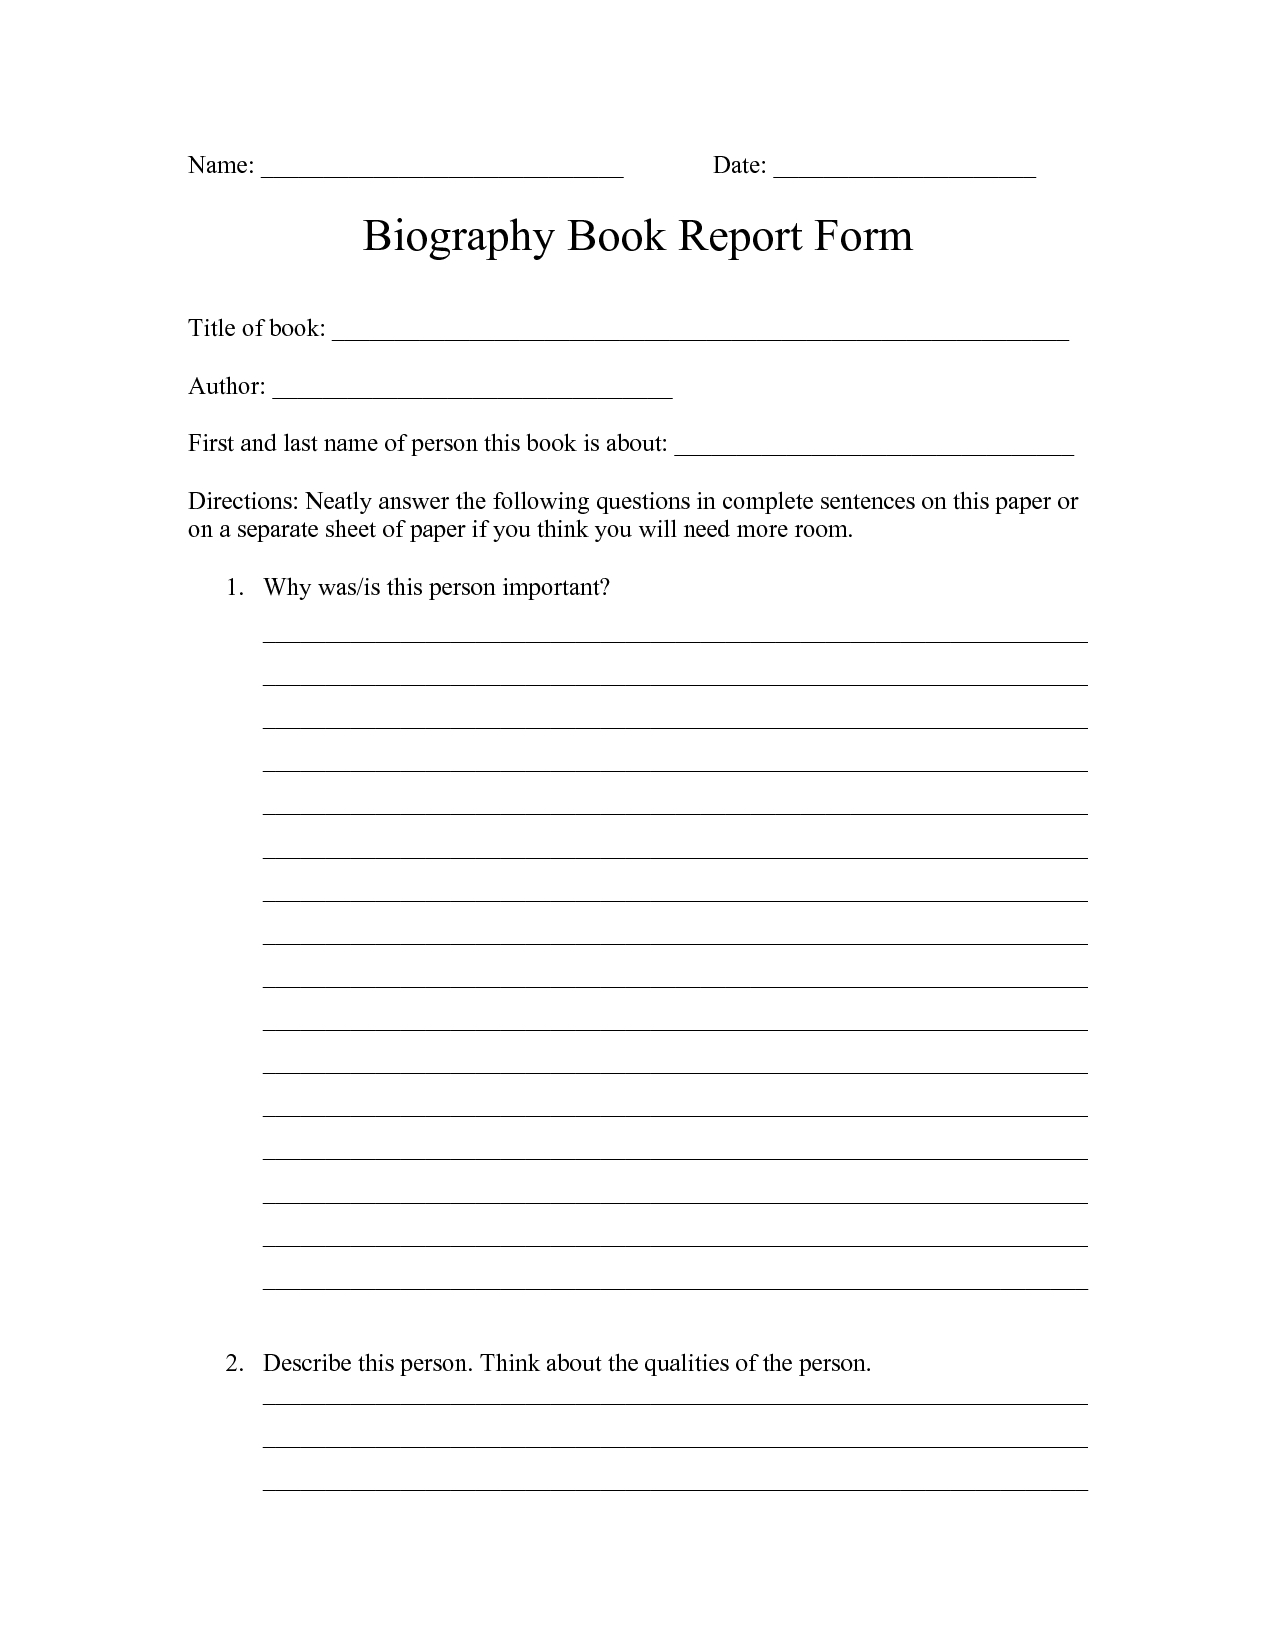 Worksheet Book Report | Printable Worksheets And Activities Regarding Biography Book Report Template